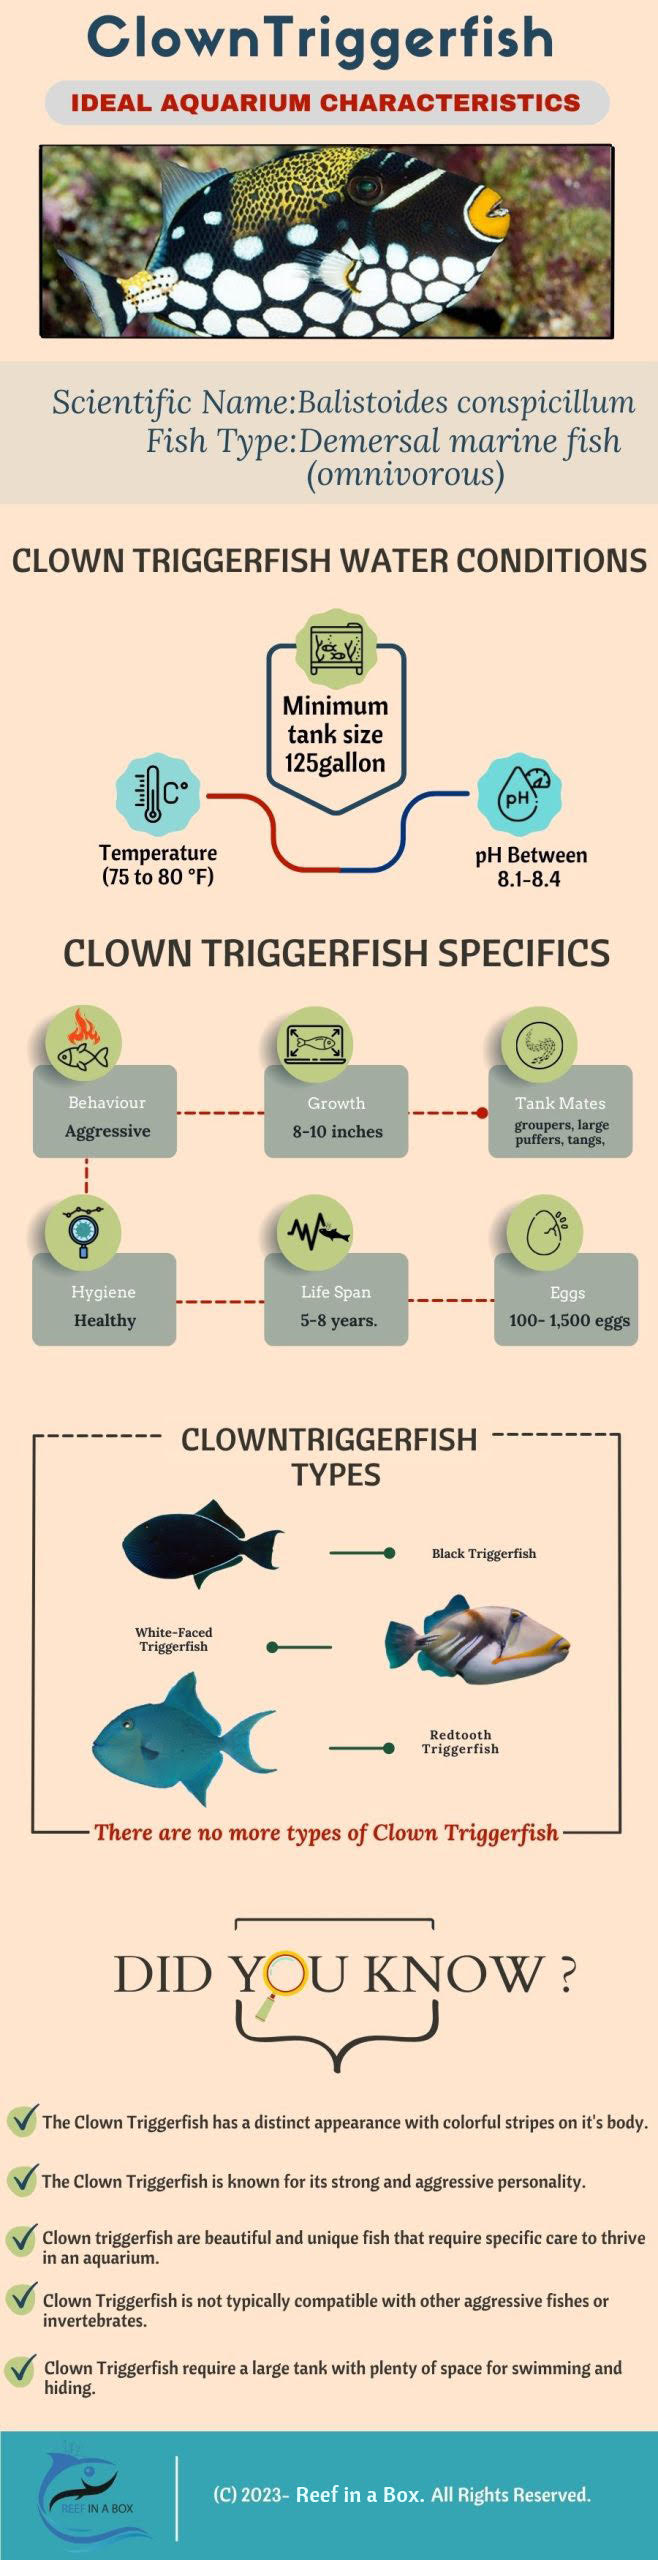 Clown Triggerfish 